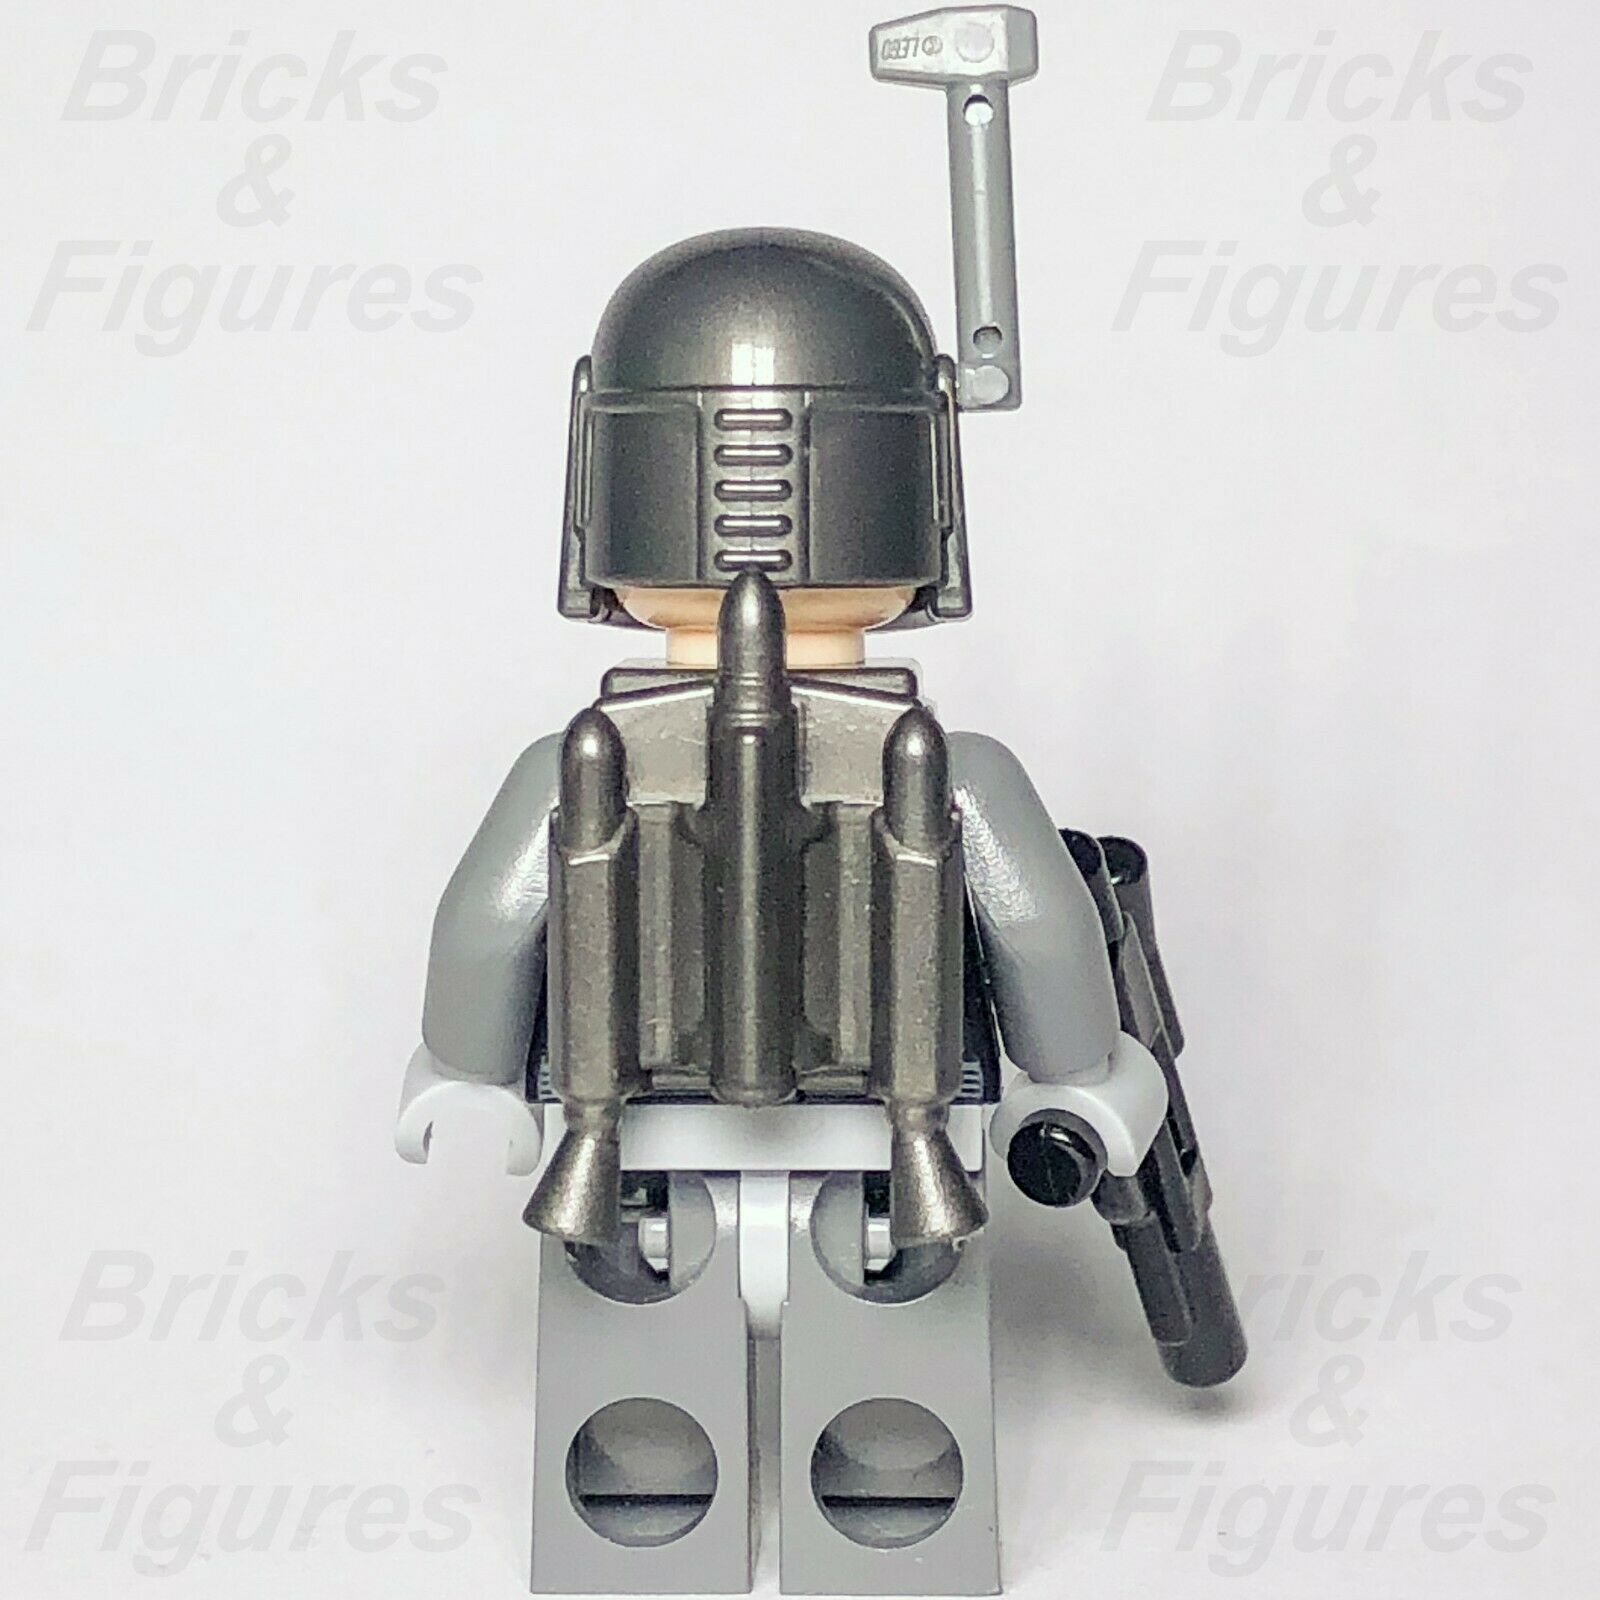 New Star Wars LEGO Mandalorian Super Commando Clone Wars Minifig 75022 Genuine - Bricks & Figures